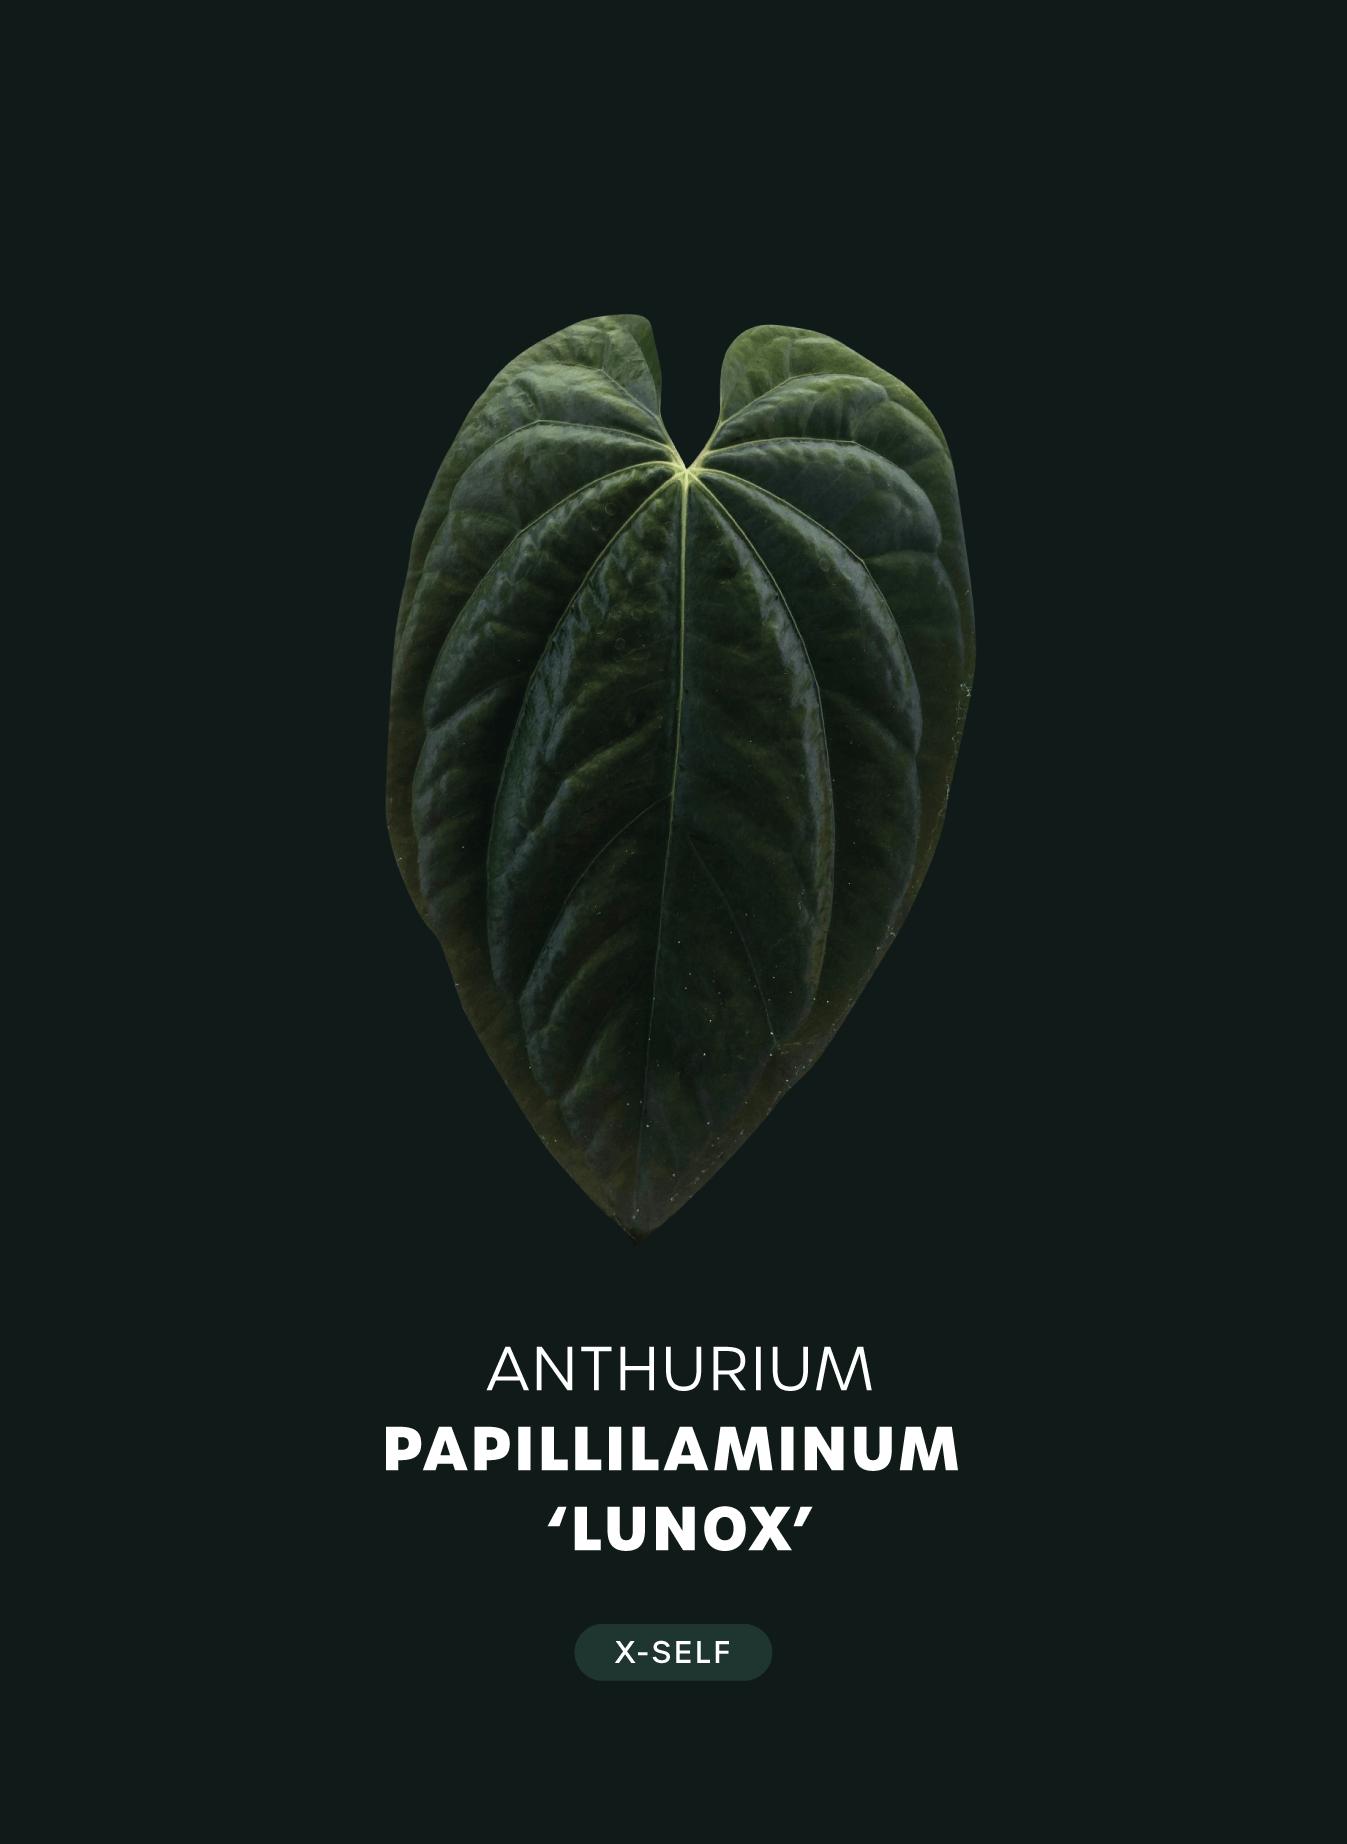 Anthurium Papillilaminum hybrid "Lunox" - SMUKHI